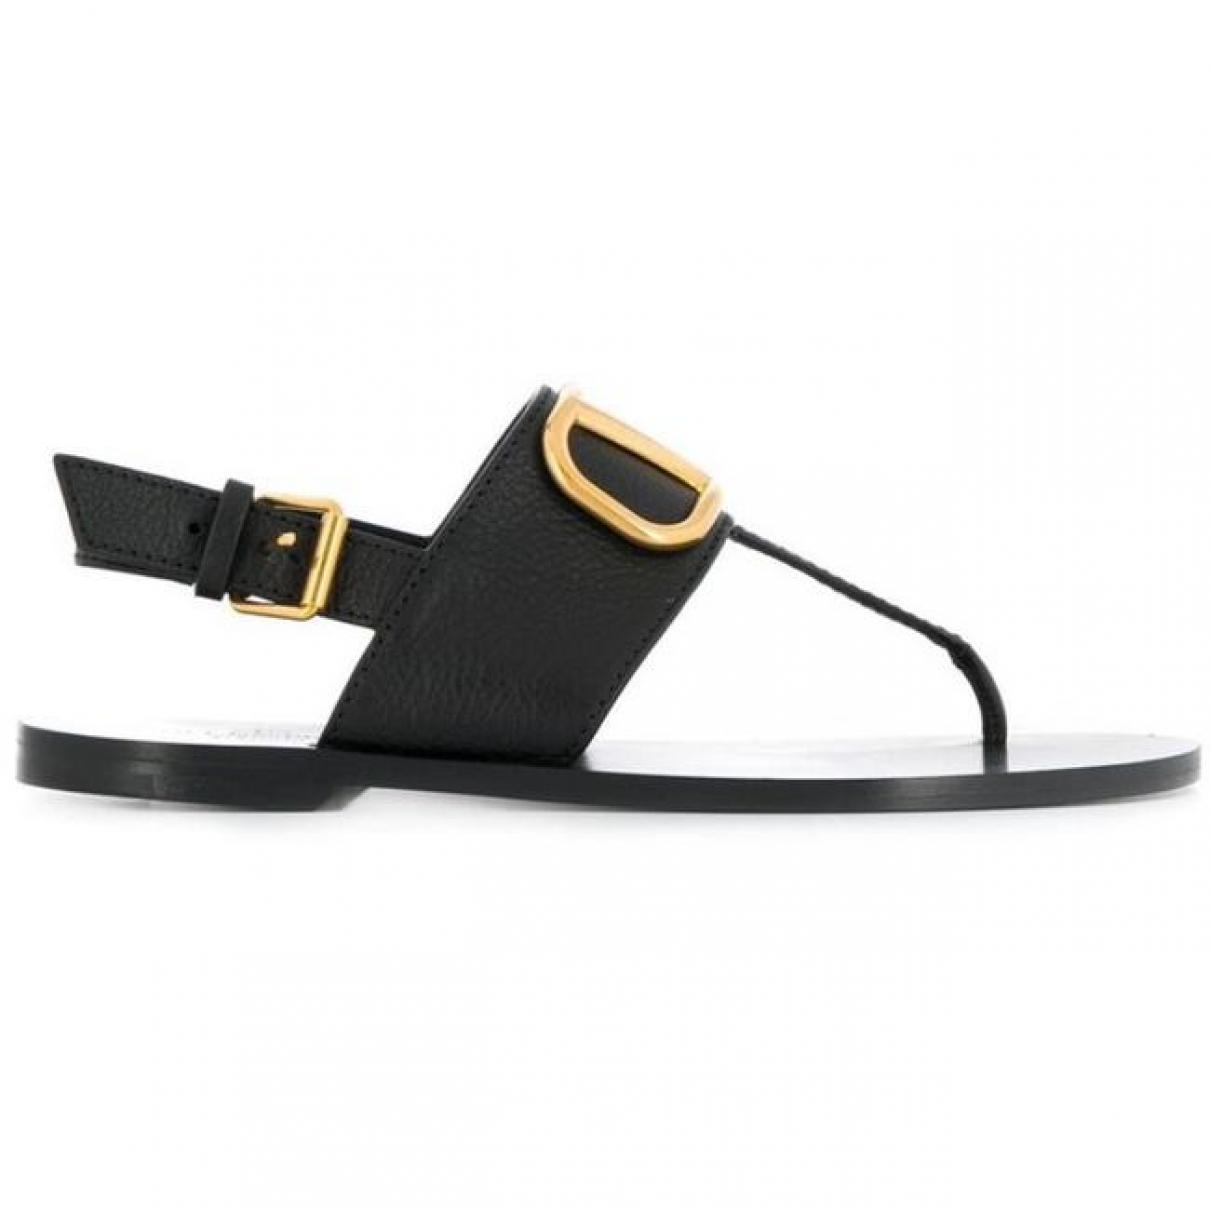 VLogo leather sandal - 3